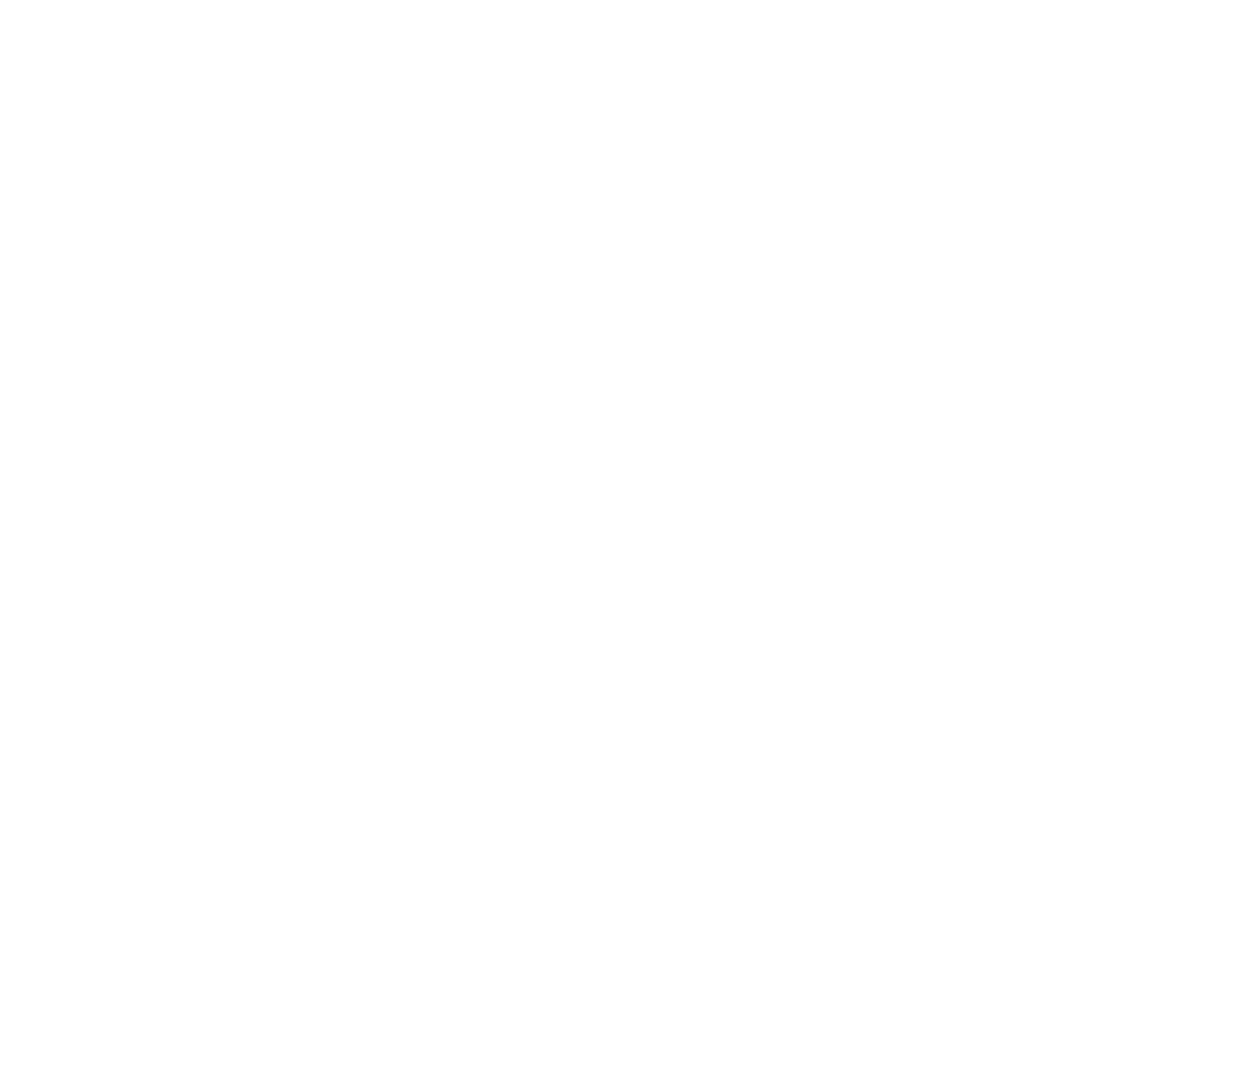 La Tormenta Sonora logo